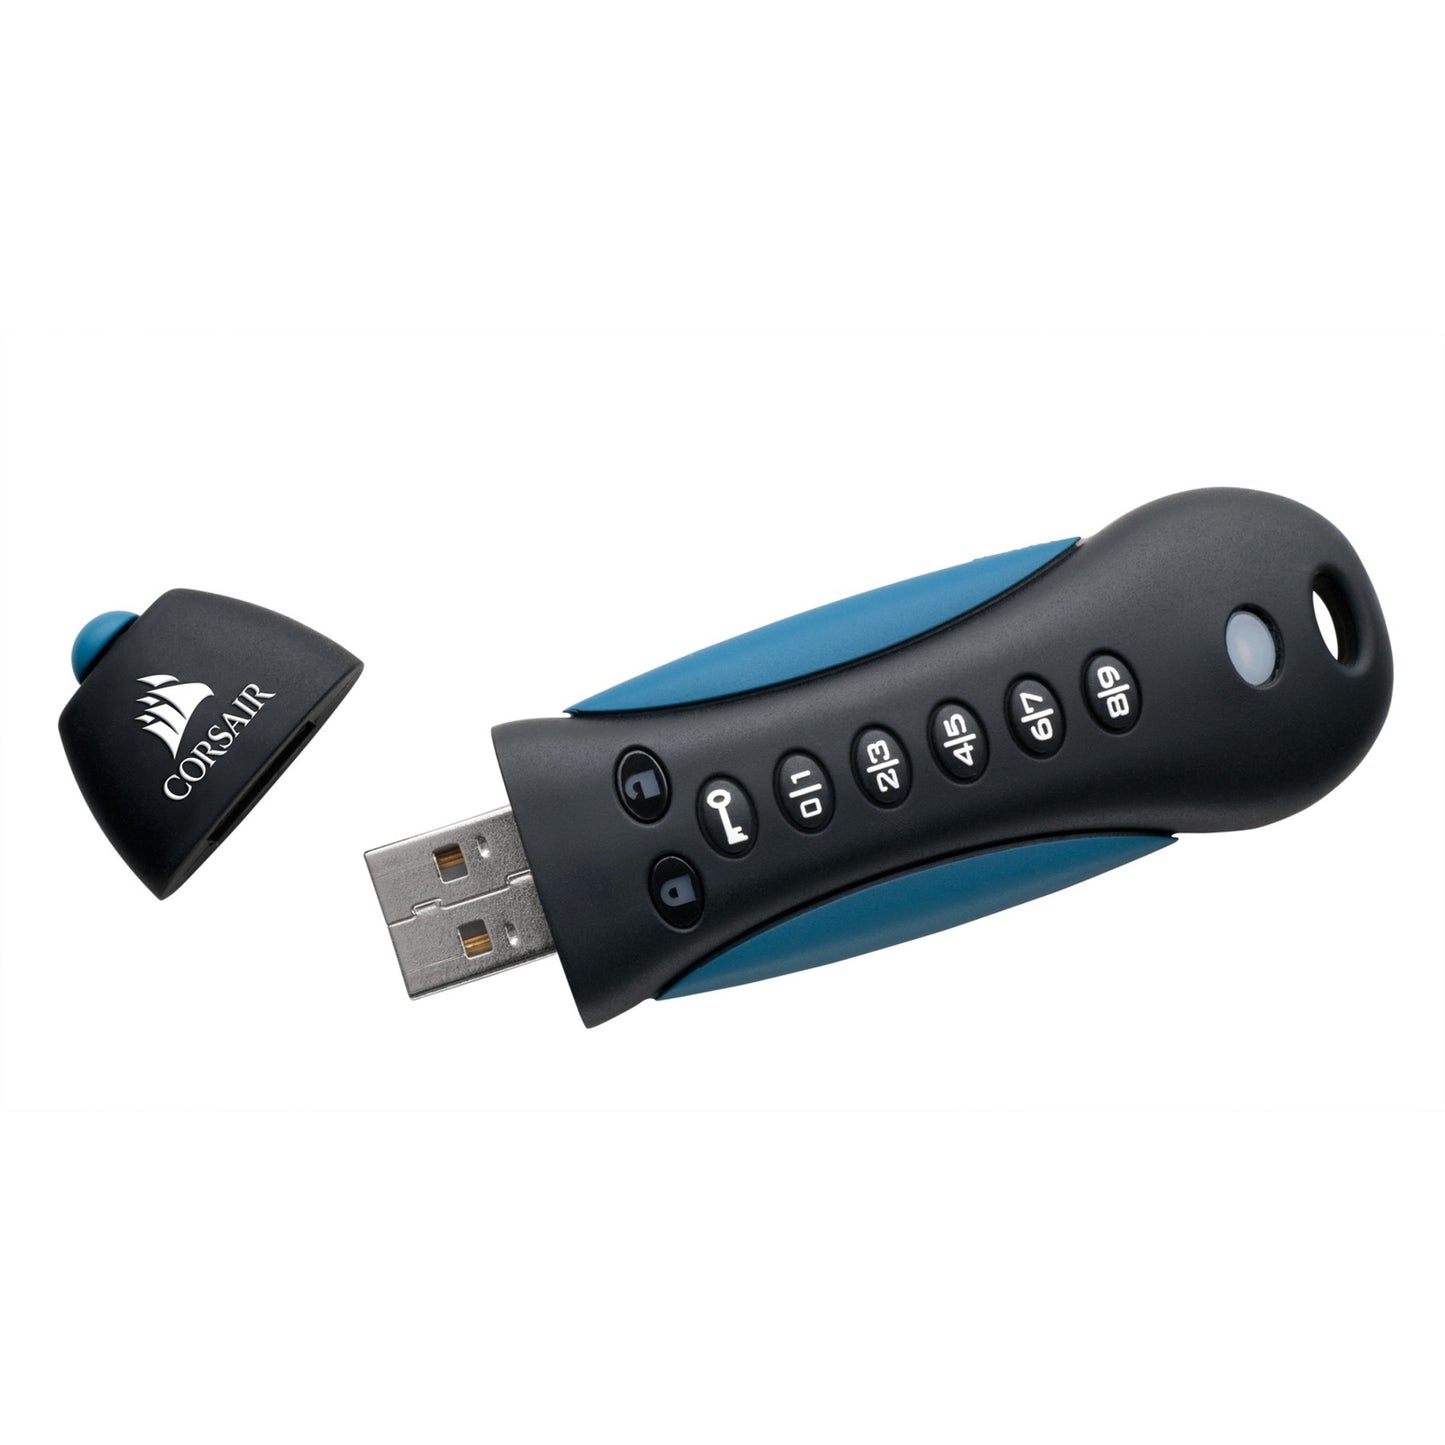 Paradone Flash Corsair 3 128 GB Secure USB 3.0 Flash Drive